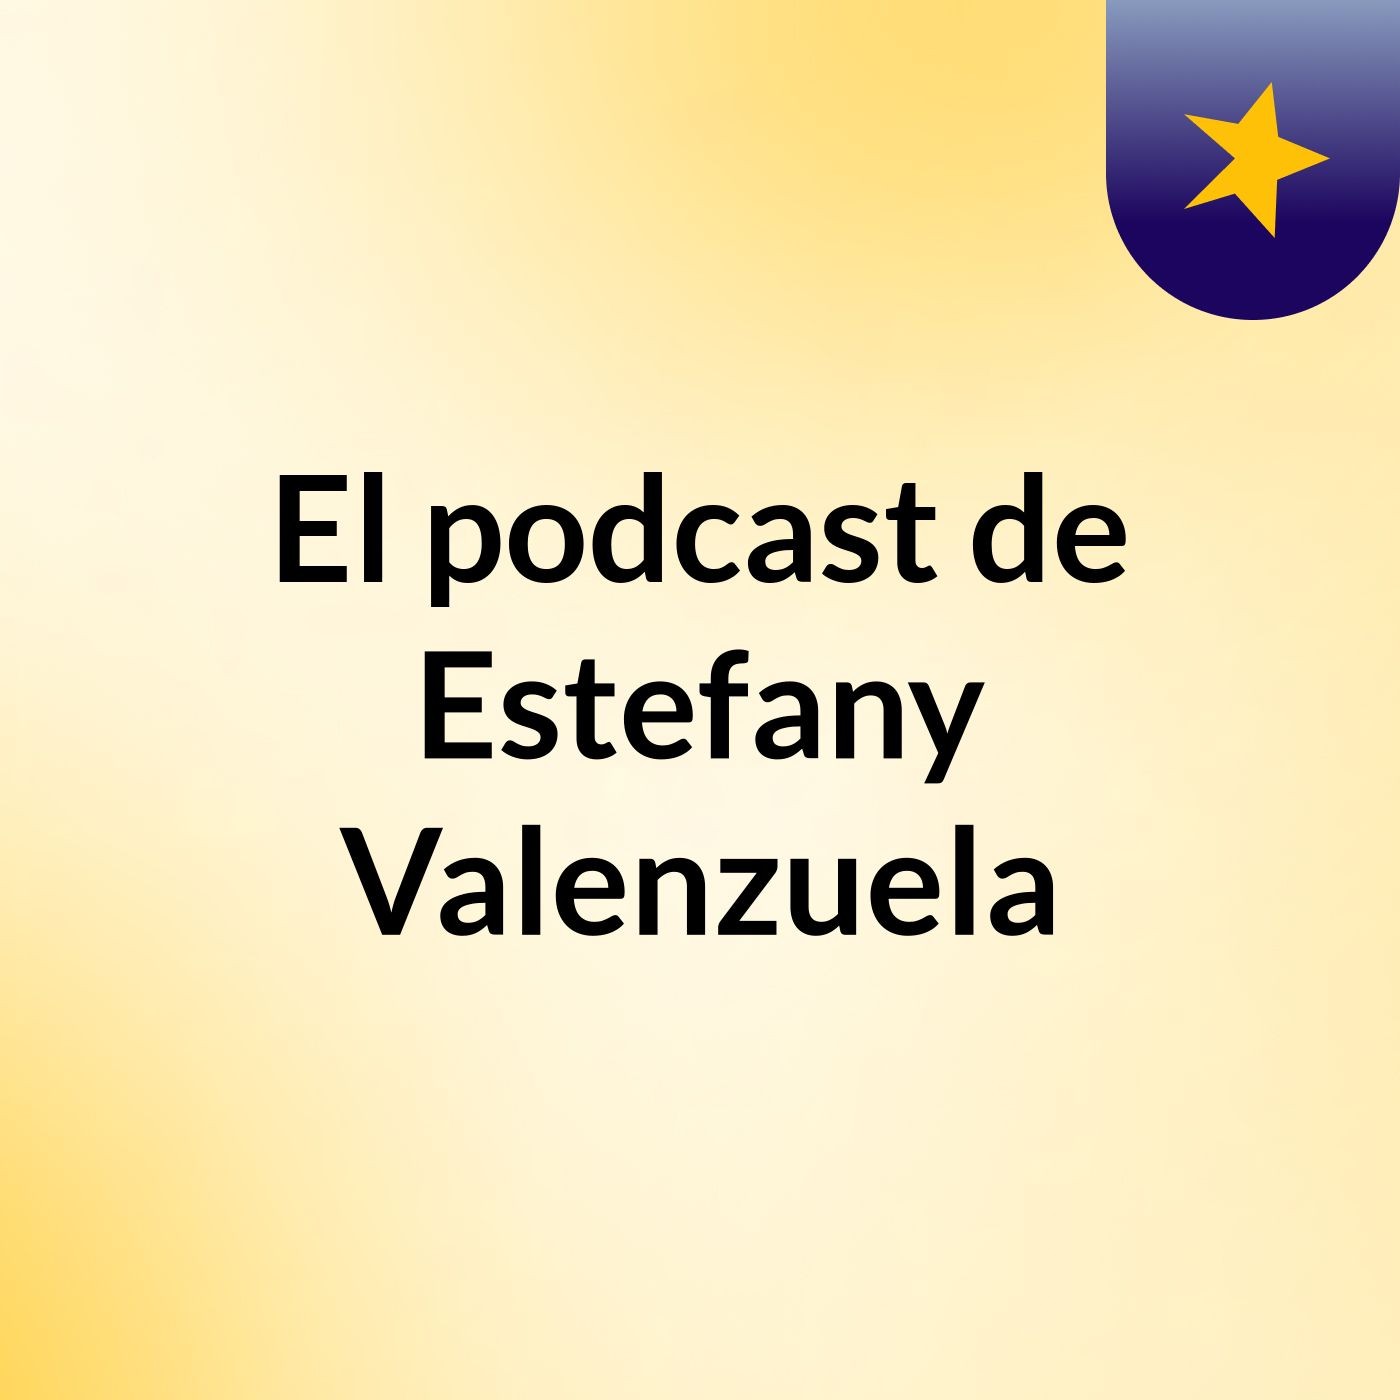 El podcast de Estefany Valenzuela